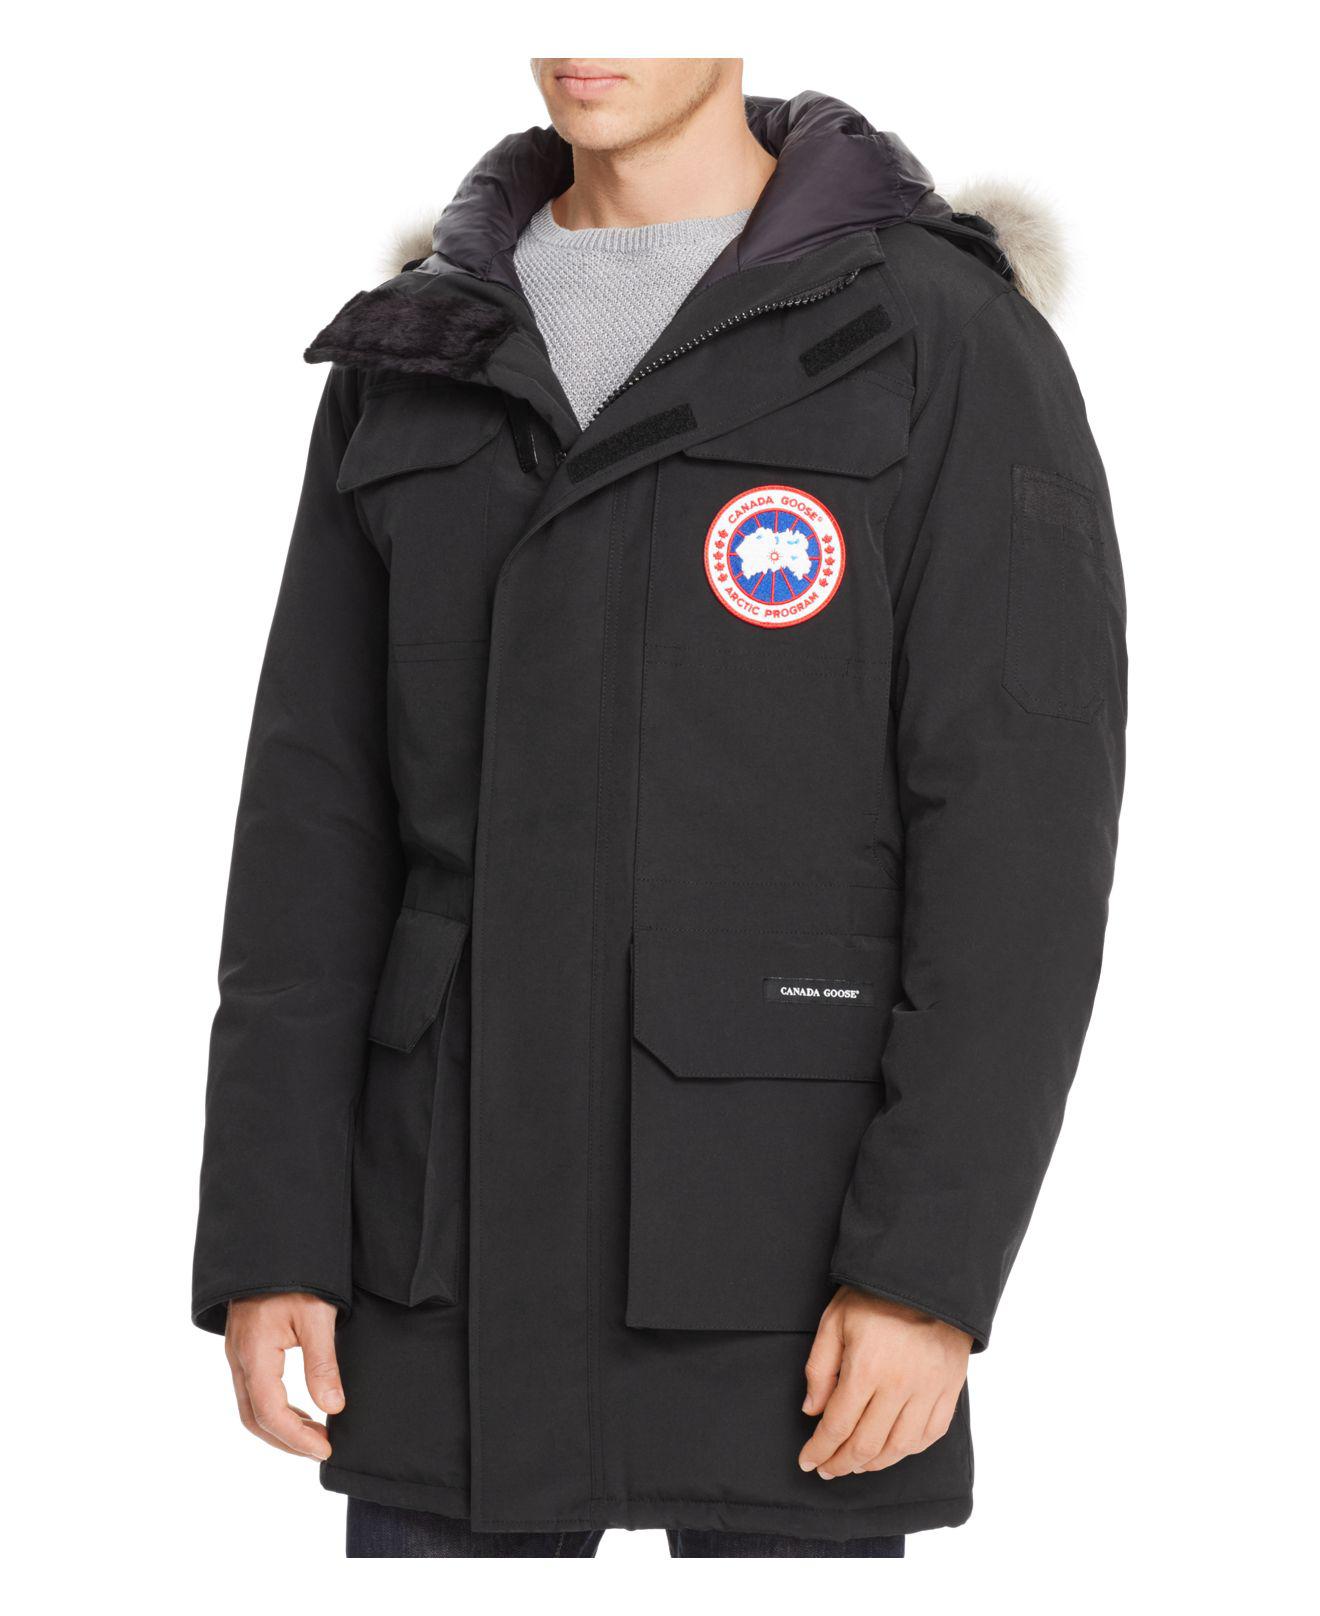 Canada Goose Citadel Parka With Fur Hood in Black for Men - Lyst